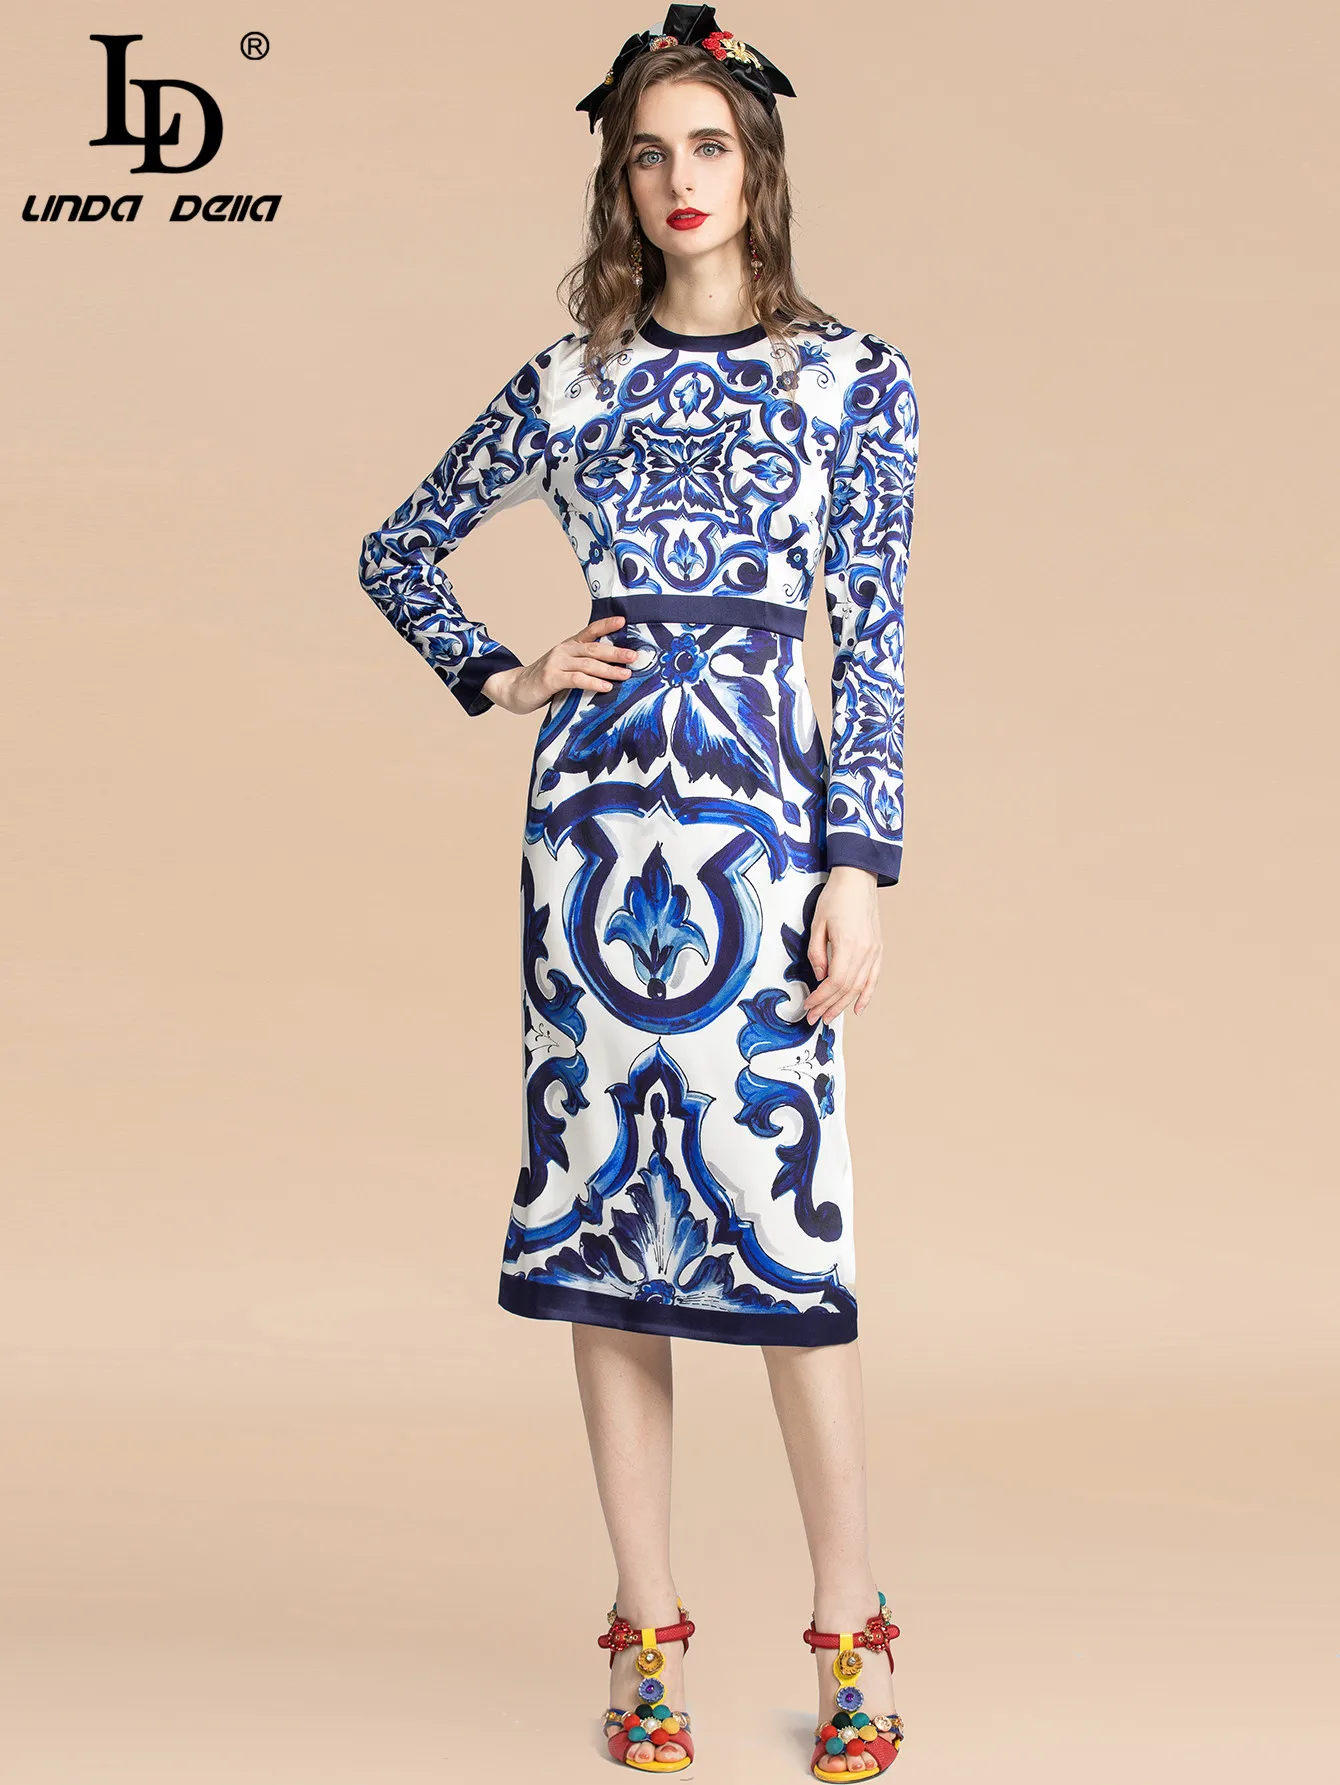 LD LINDA DELLA Fashion Designer Autumn Dress Women Long sleeve Blue and White Porcelain Print Vacation Slim Midi Dresses